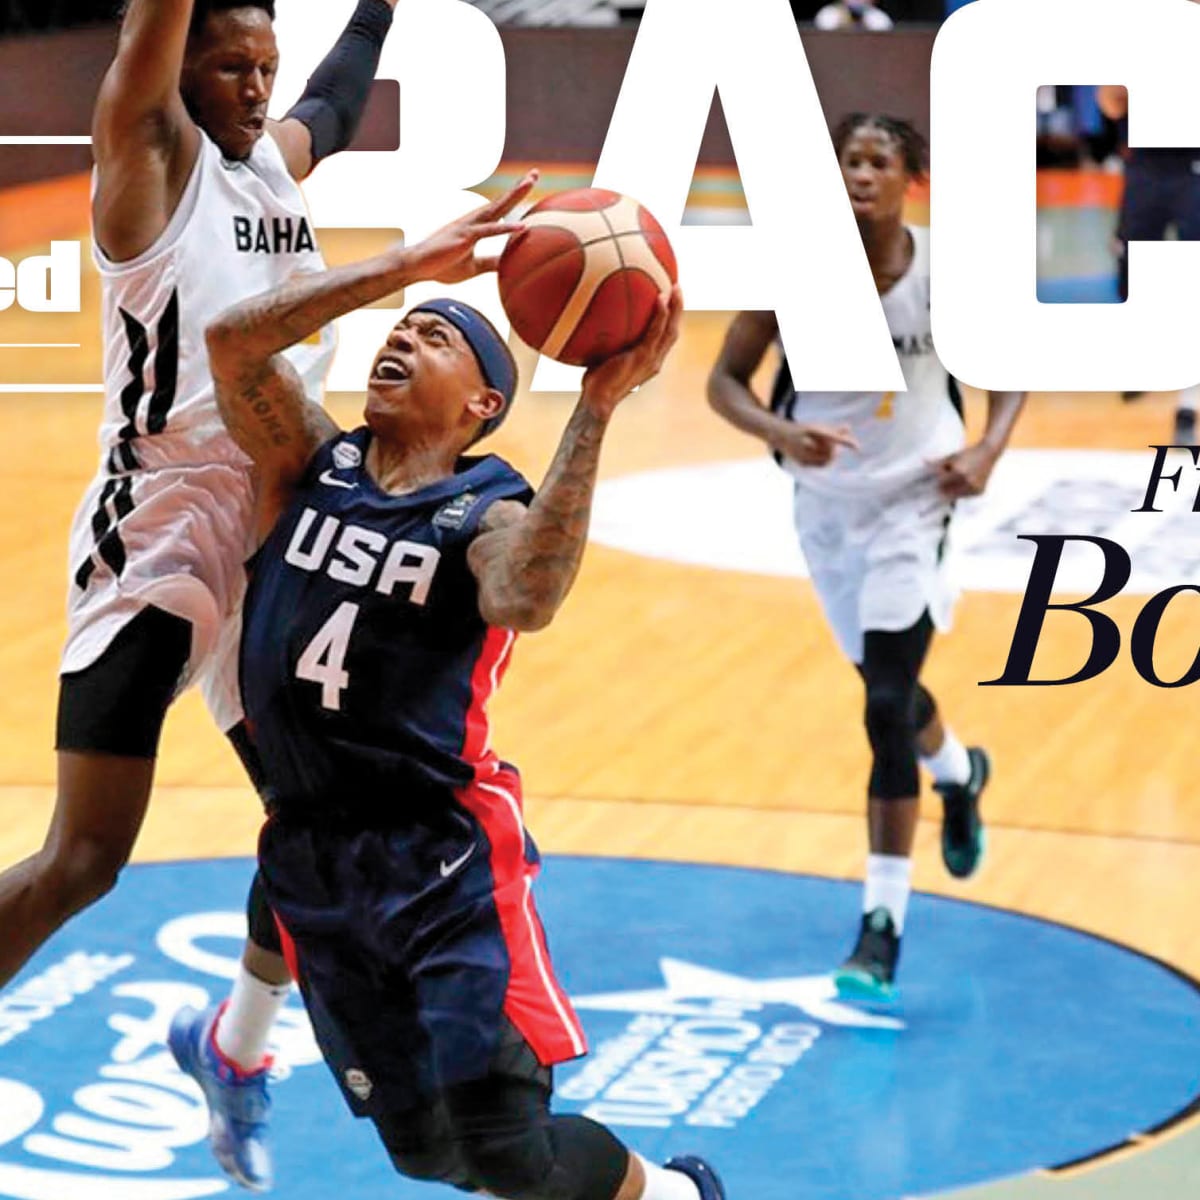 Isaiah Thomas: An Inspirational NBA Career - Back Sports Page